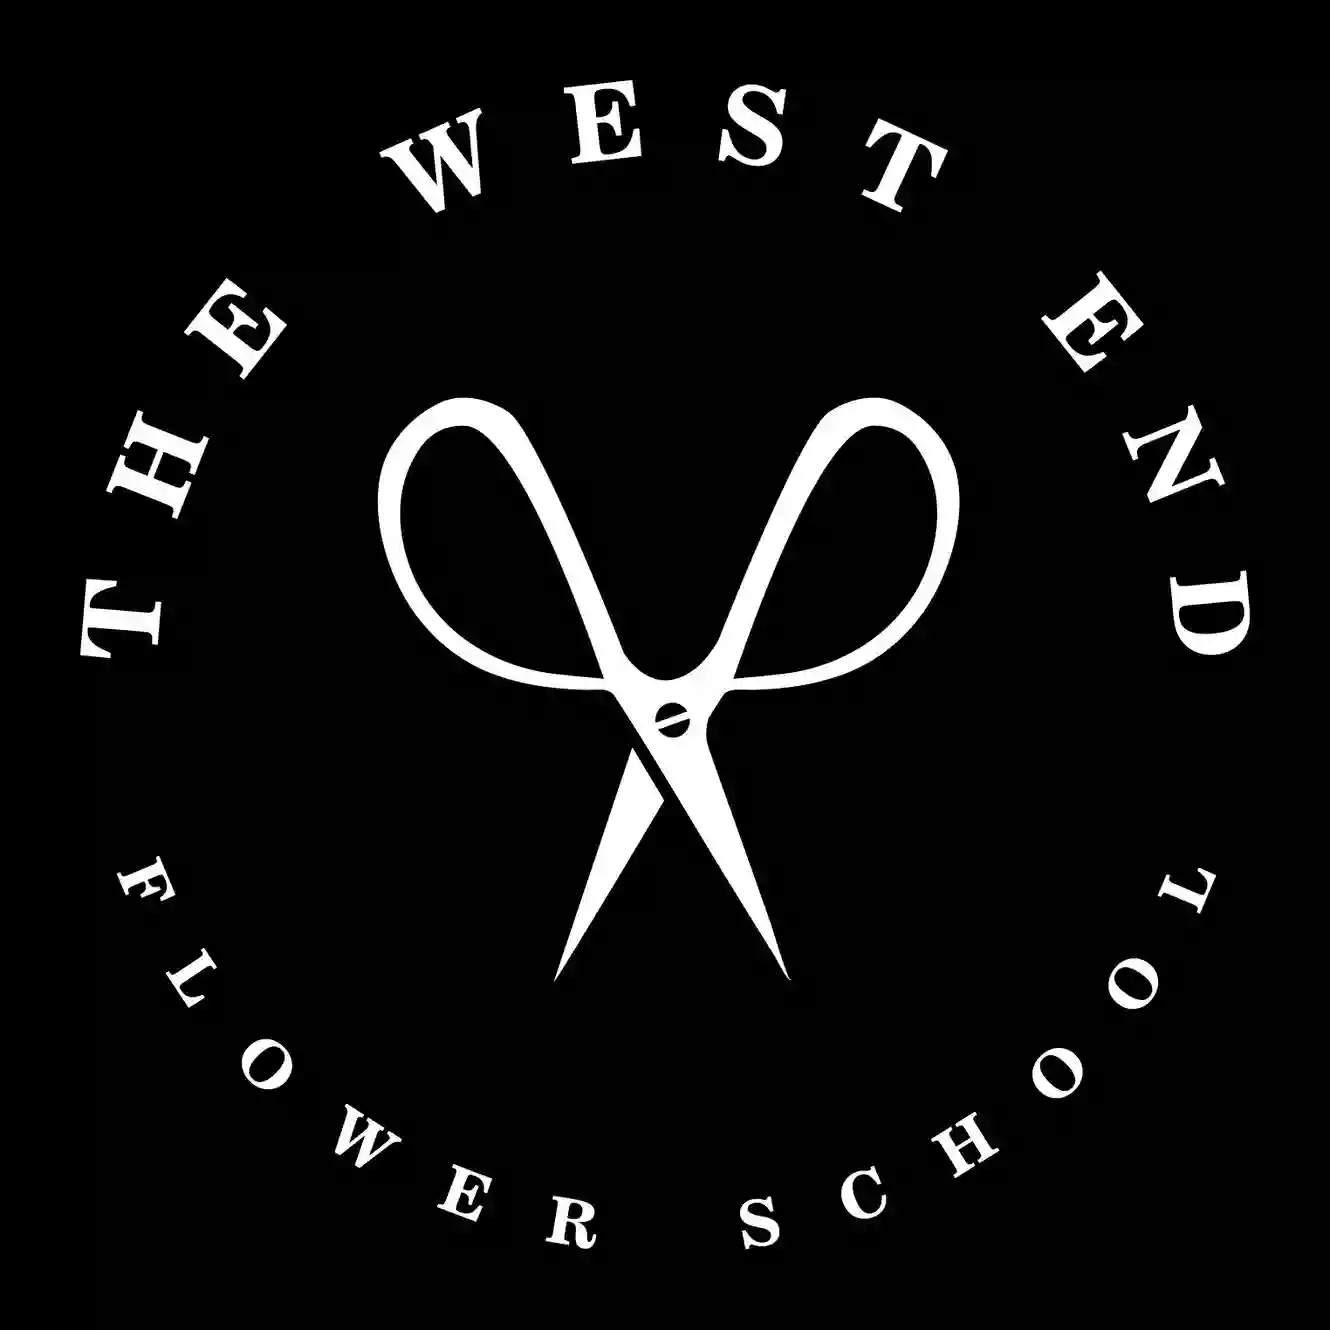 The West End Flower School